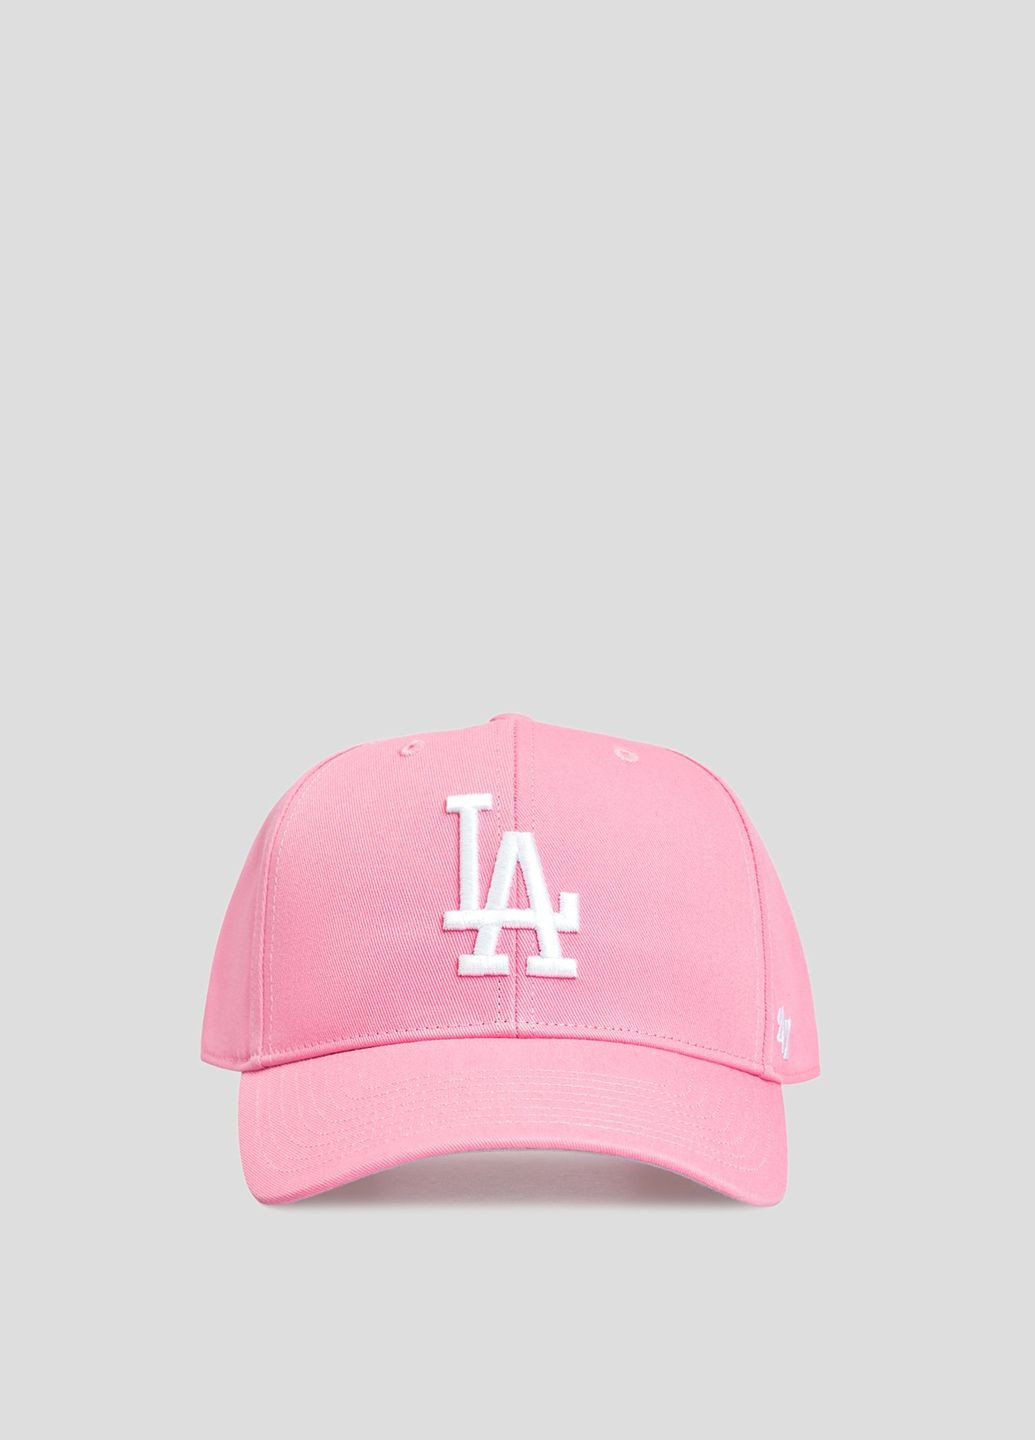 Кепка MVP LOS ANGELES DODGERS RAISED BAS розовый, серый unisex OSFA 47 Brand (260597242)